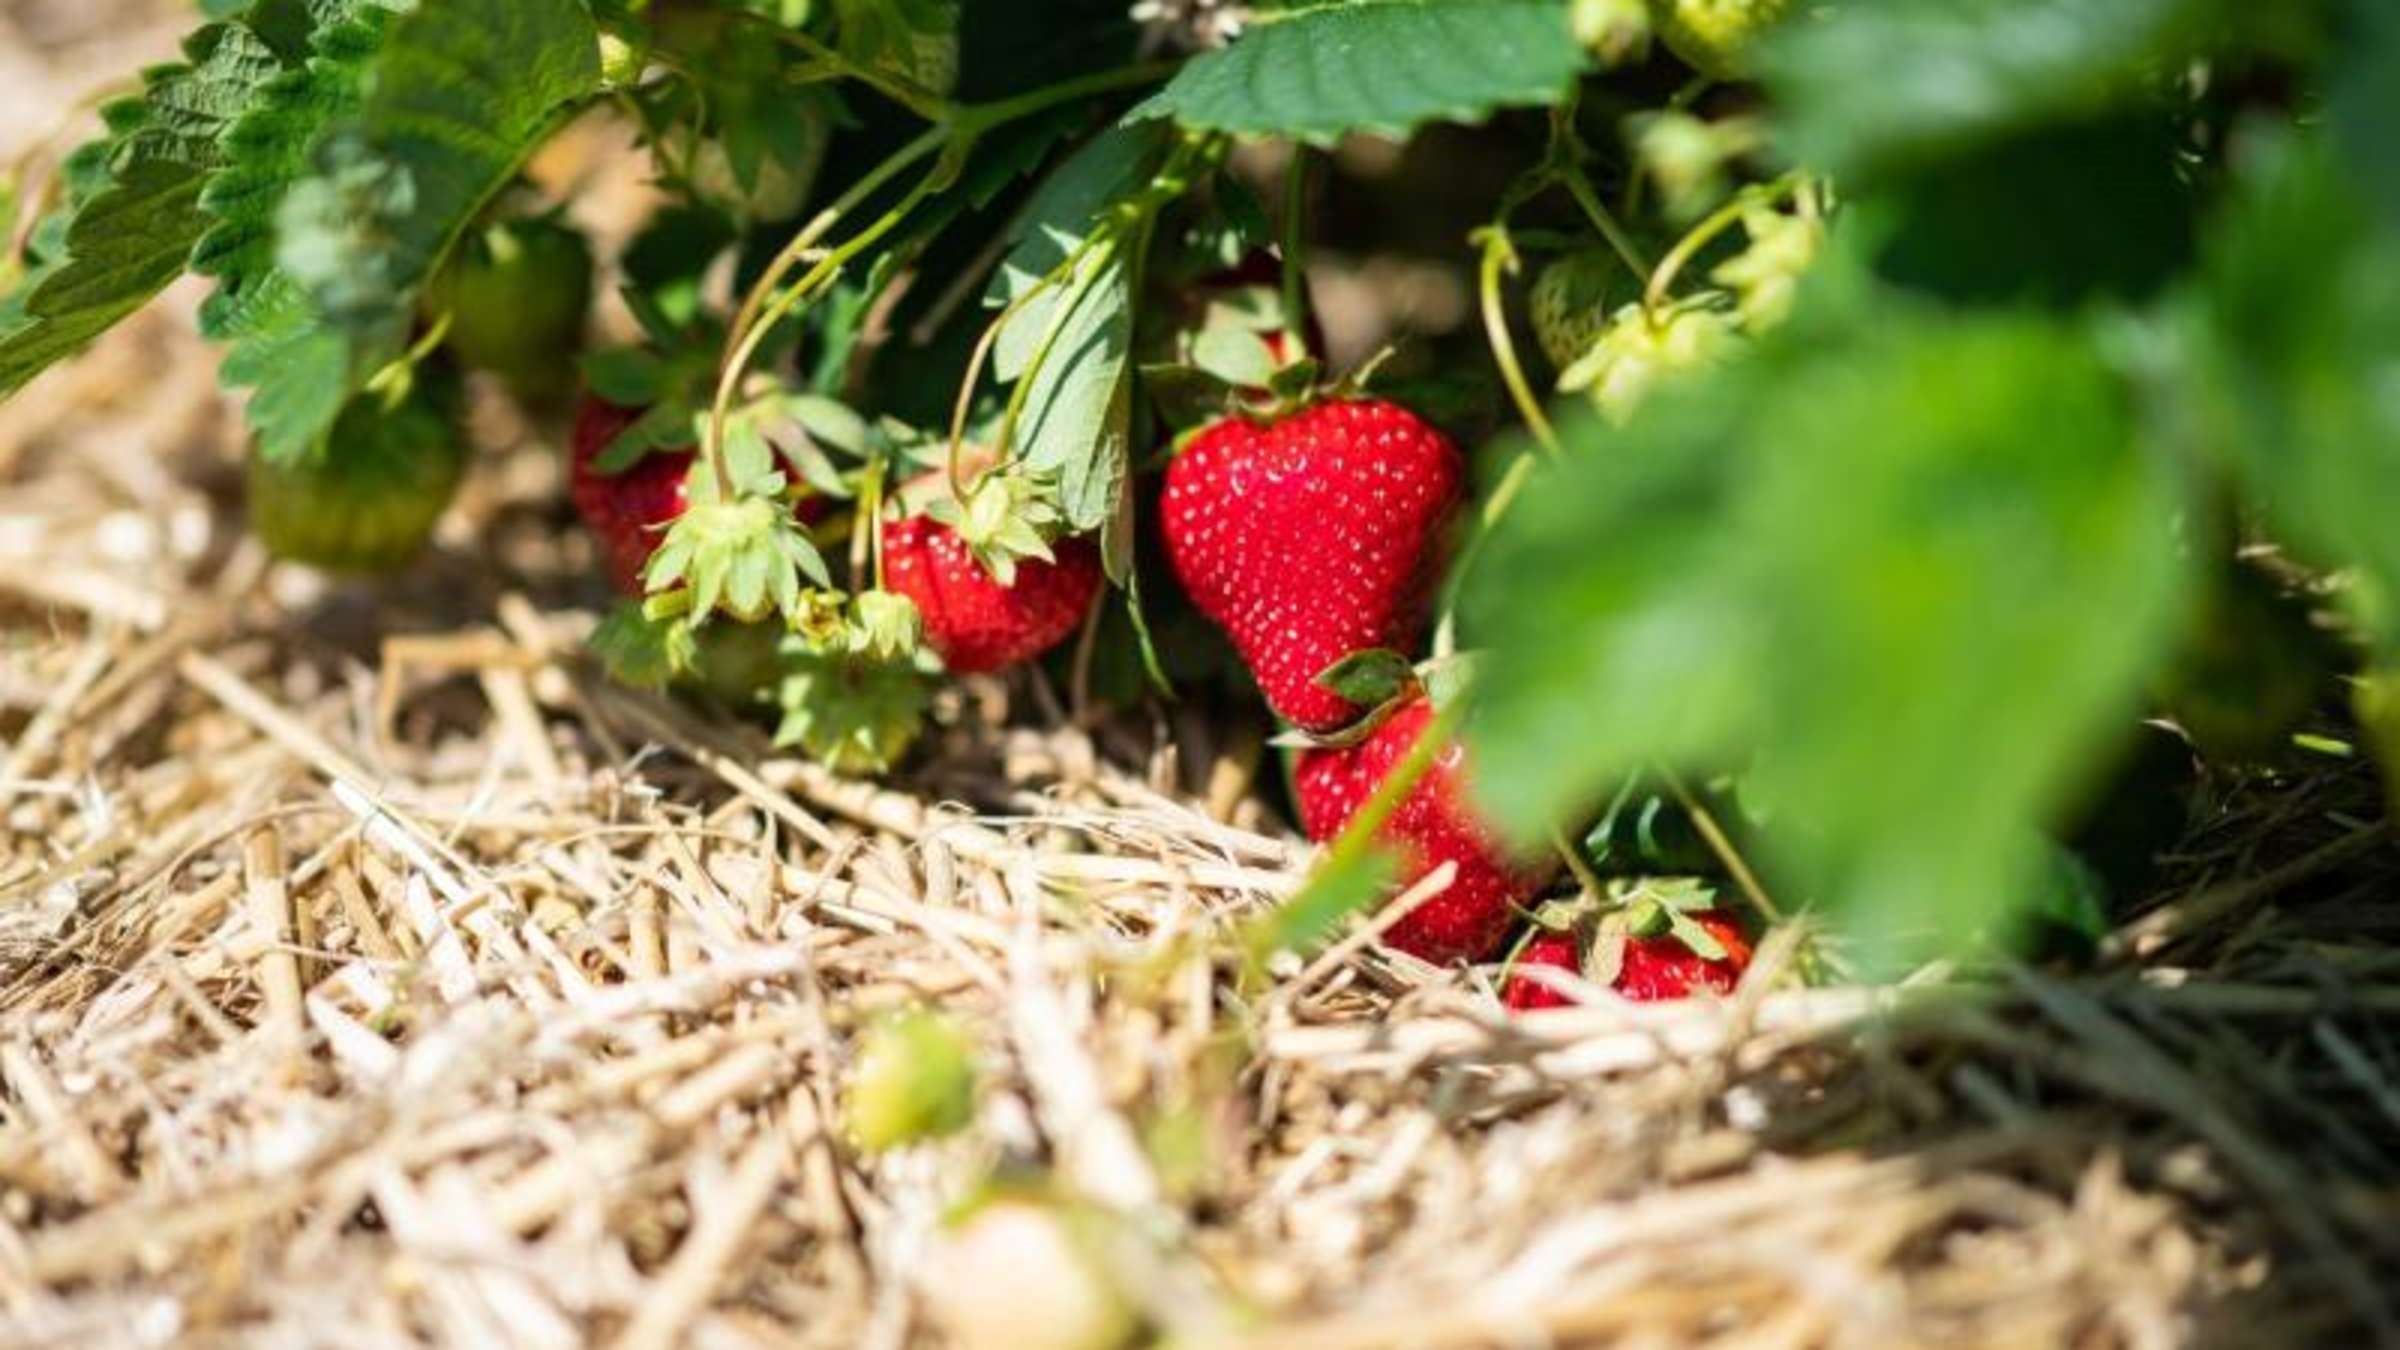 vögel von erdbeeren fernhalten erdbeeren mit stroh bedecken wie lange erdbeeren abdecken reife erdbeeren von nah boden mit stroh